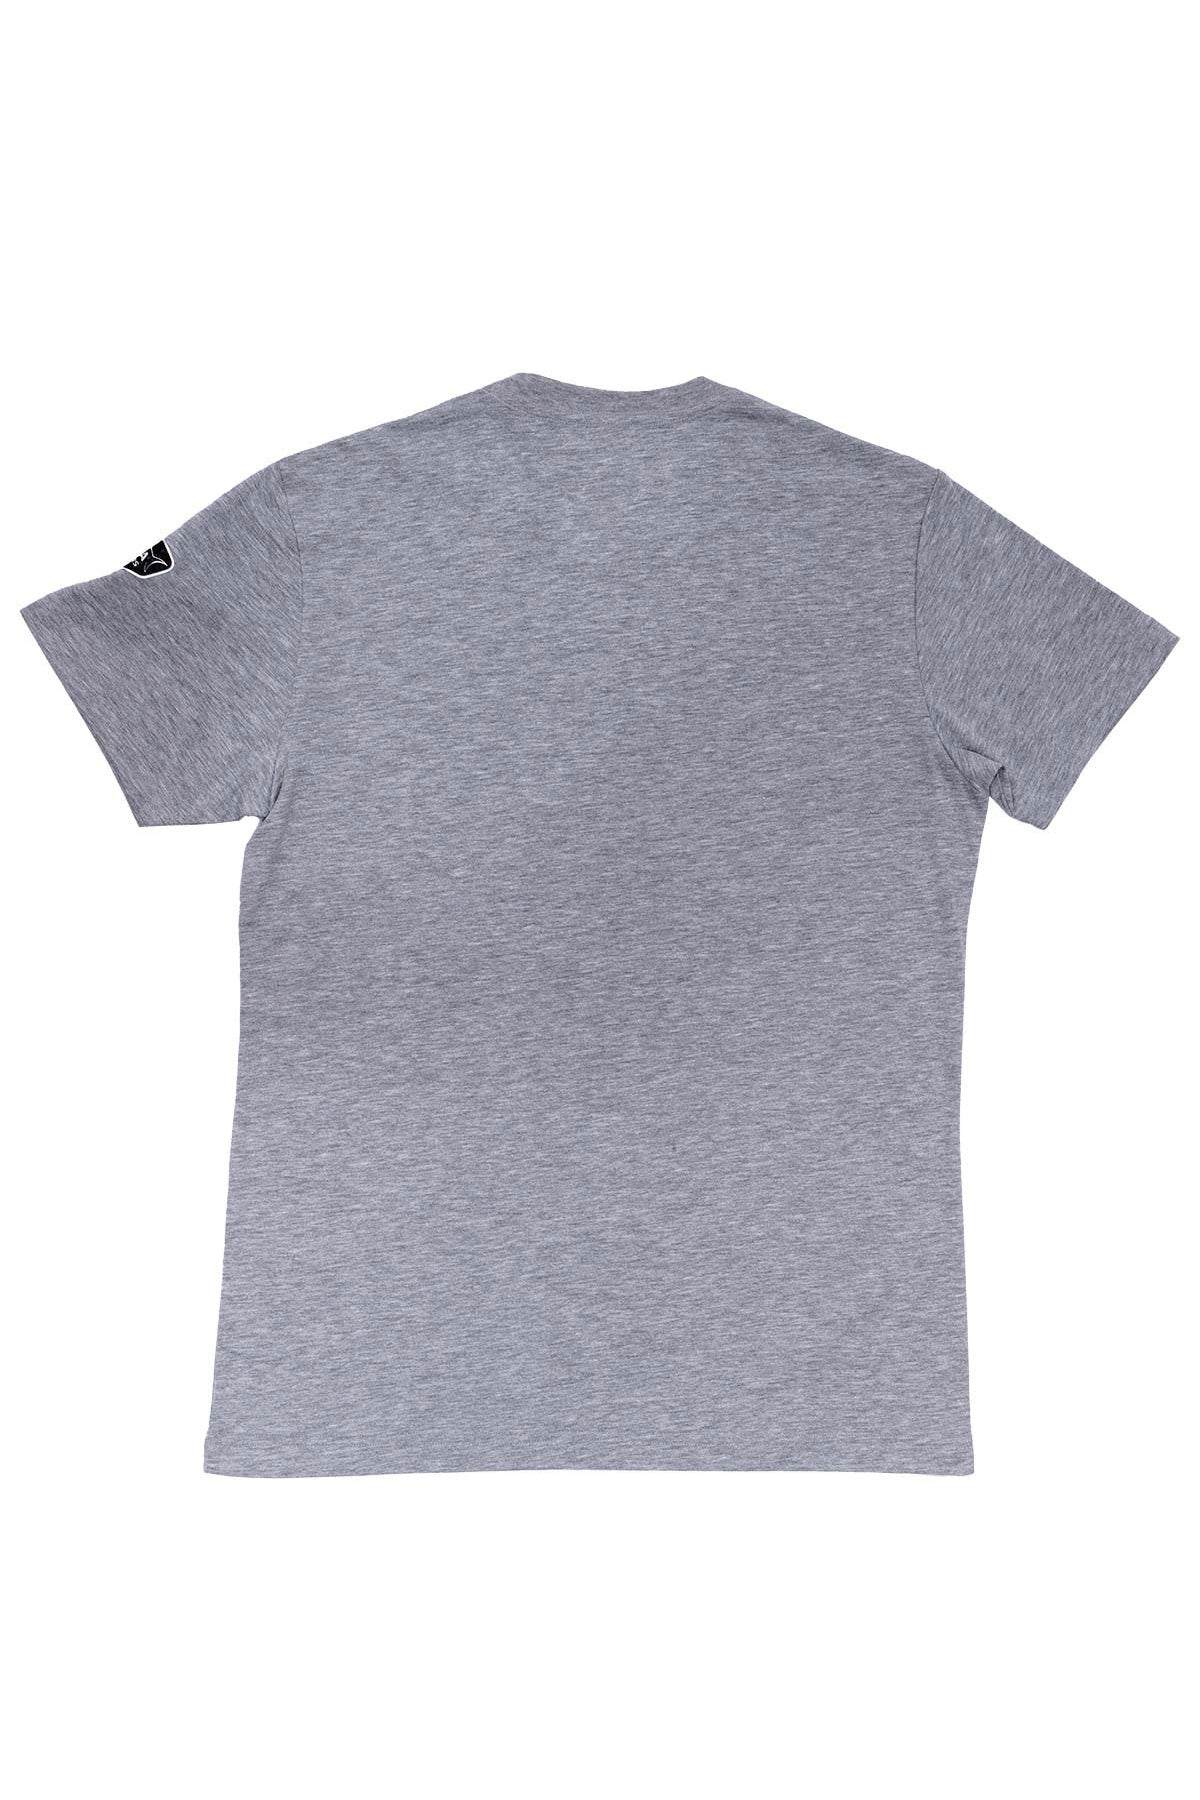 BFT  Basic Short Sleeve Crew Neck T-Shirt - Grey Marl - Stafu Pro Series